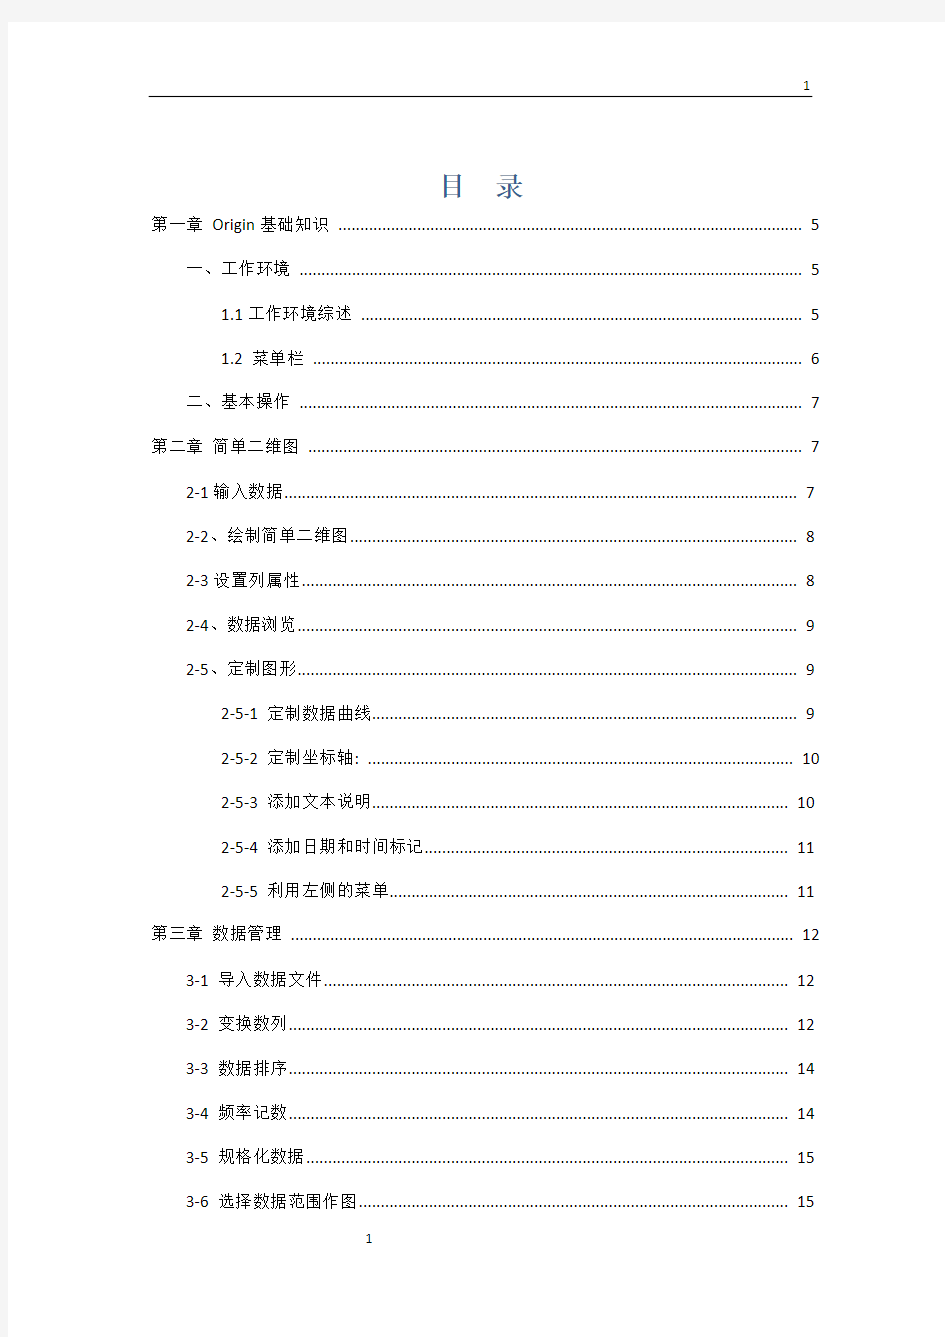 ORIGIN教程中文版